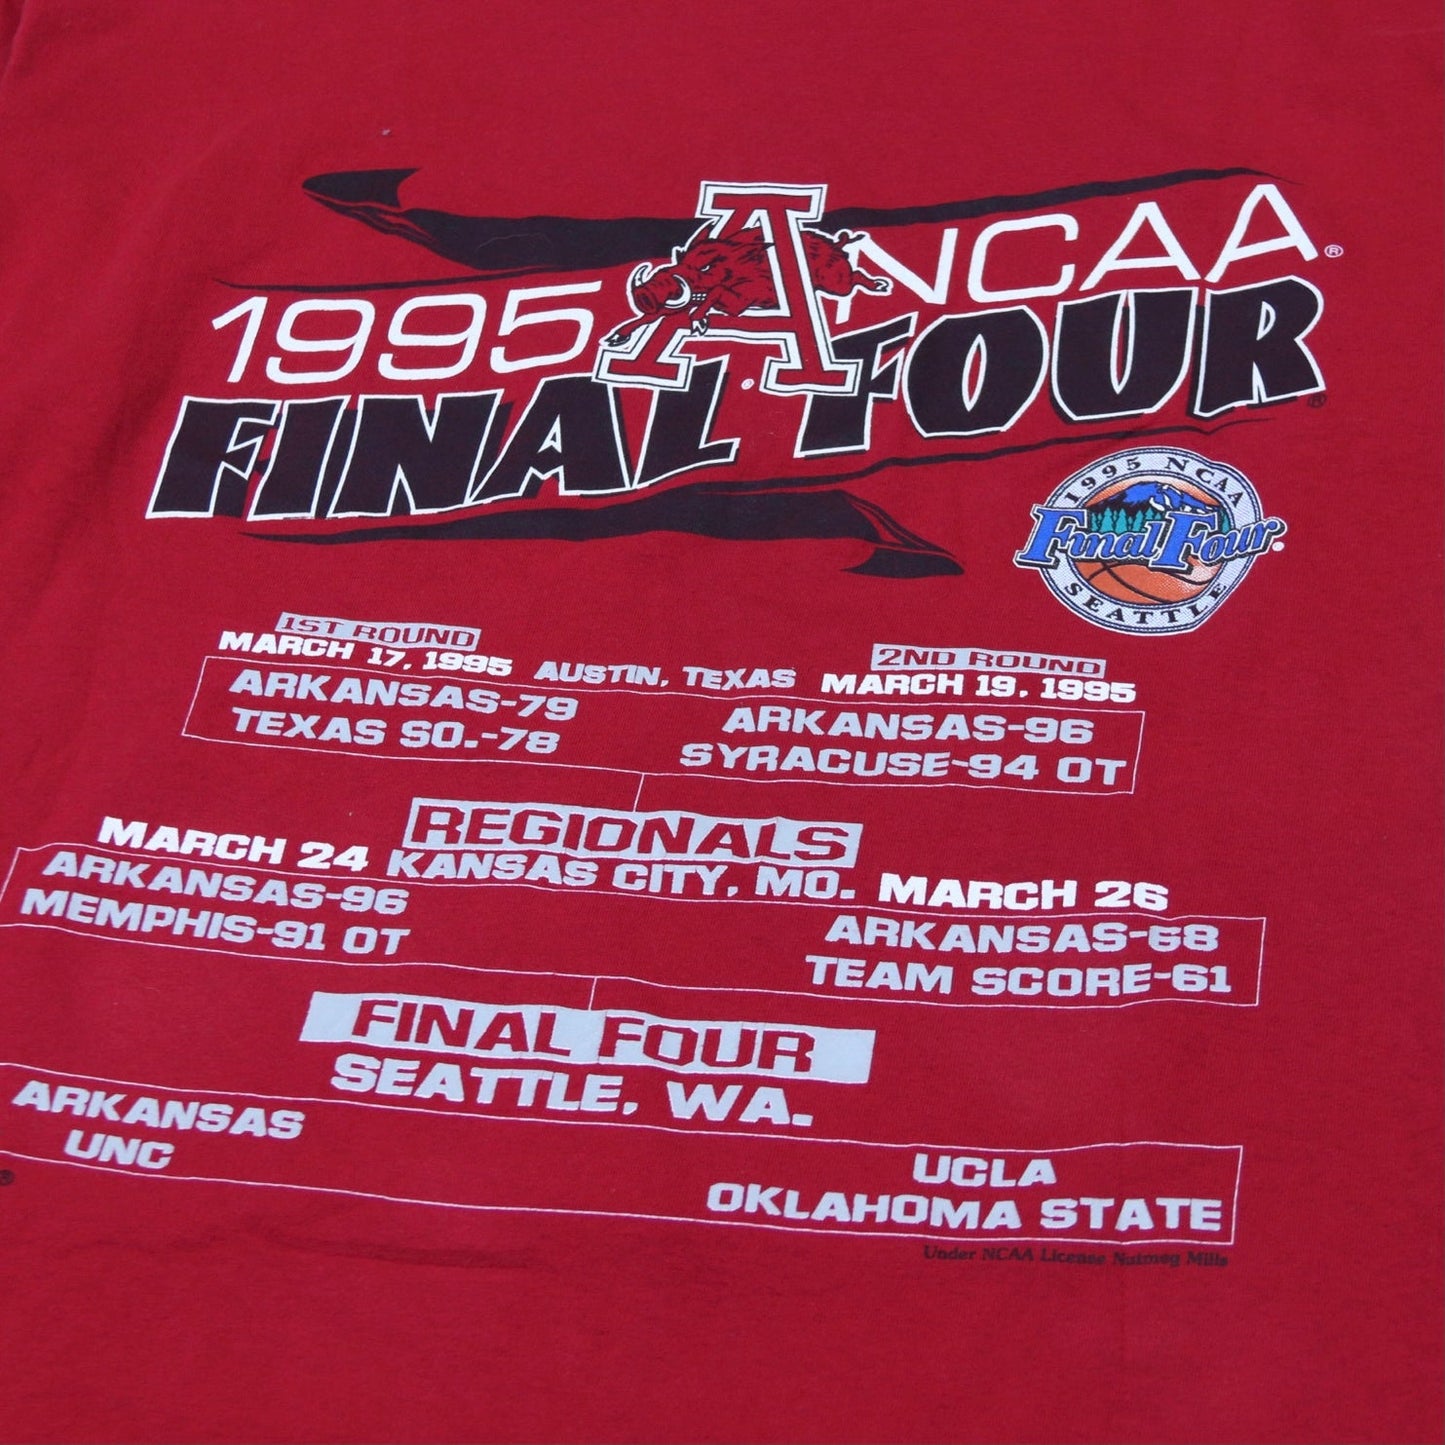 1995 Arkansas Razorbacks Final Four - backtovida